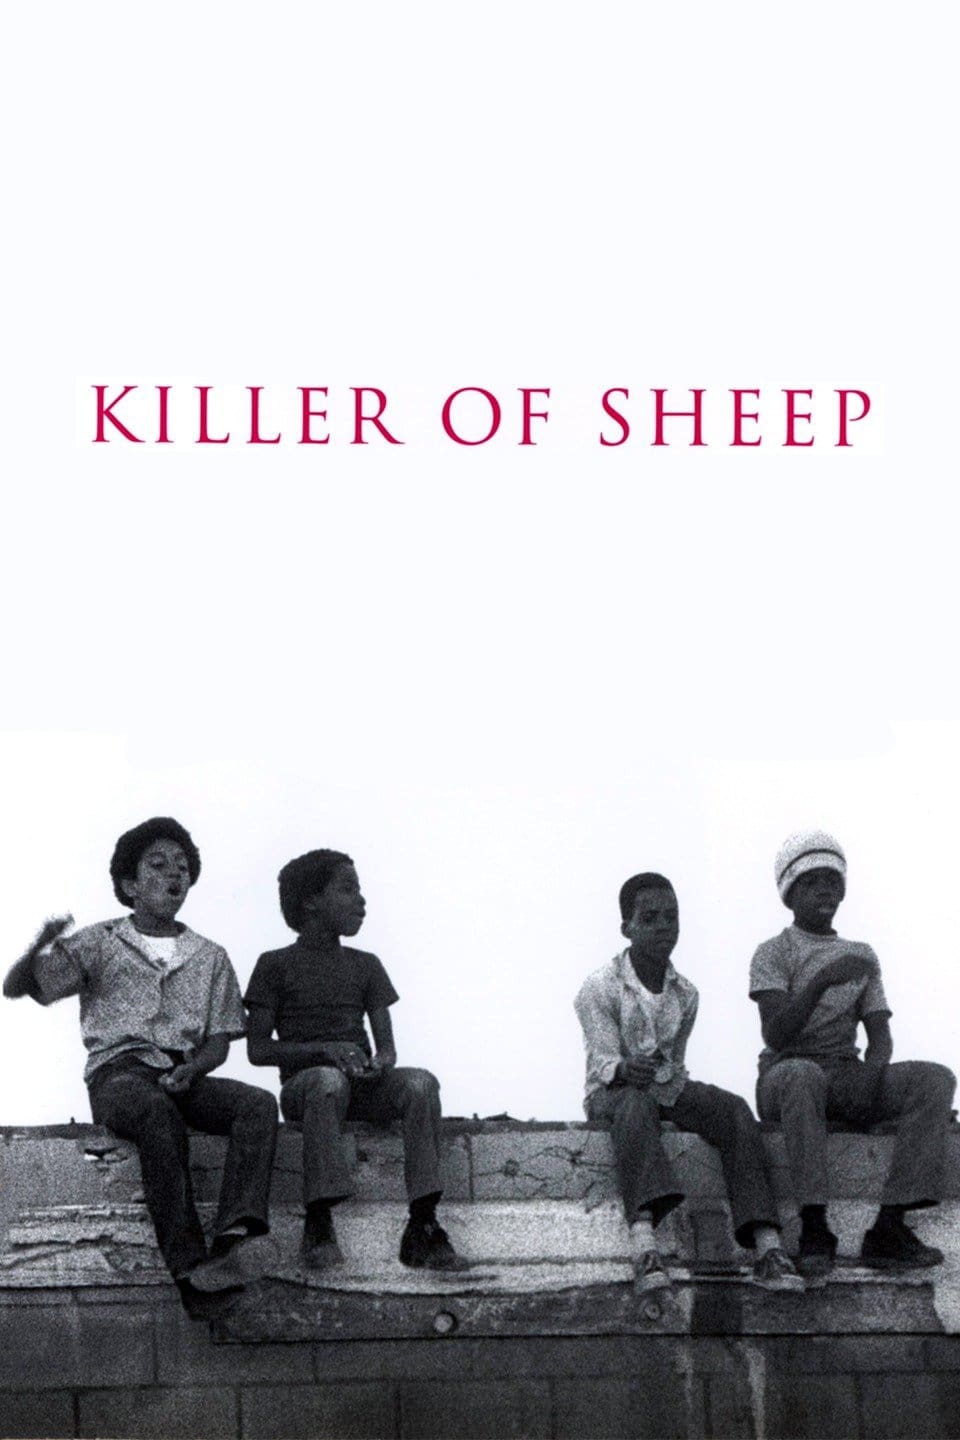 Killer of Sheep (1978)